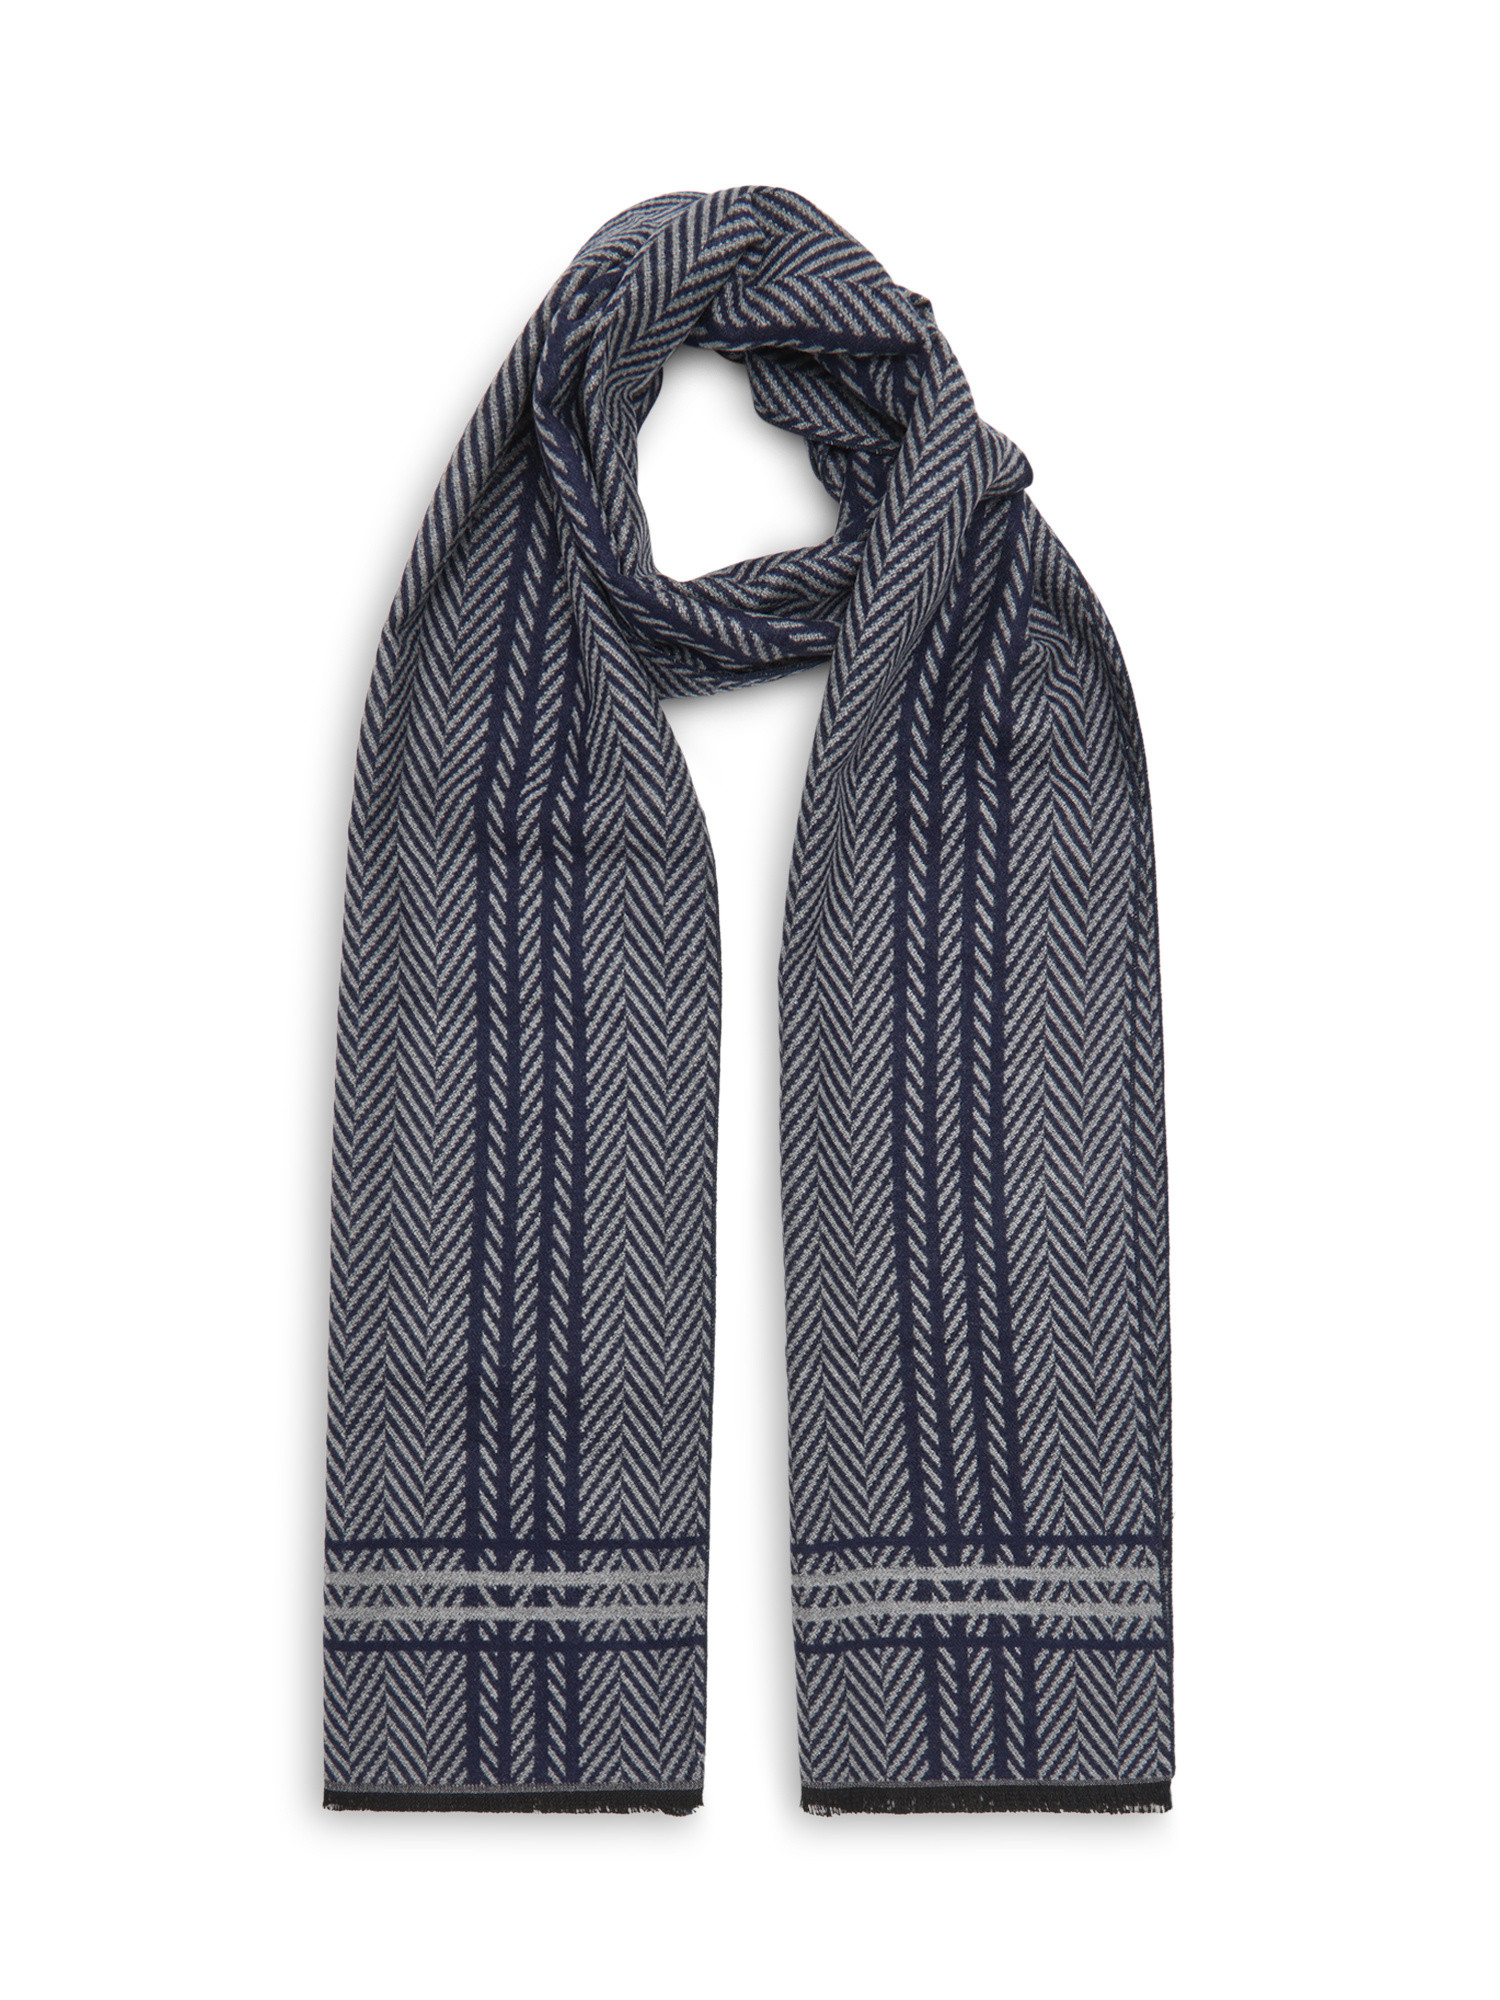 Luca D'Altieri - Herringbone viscose scarf, Blue, large image number 0